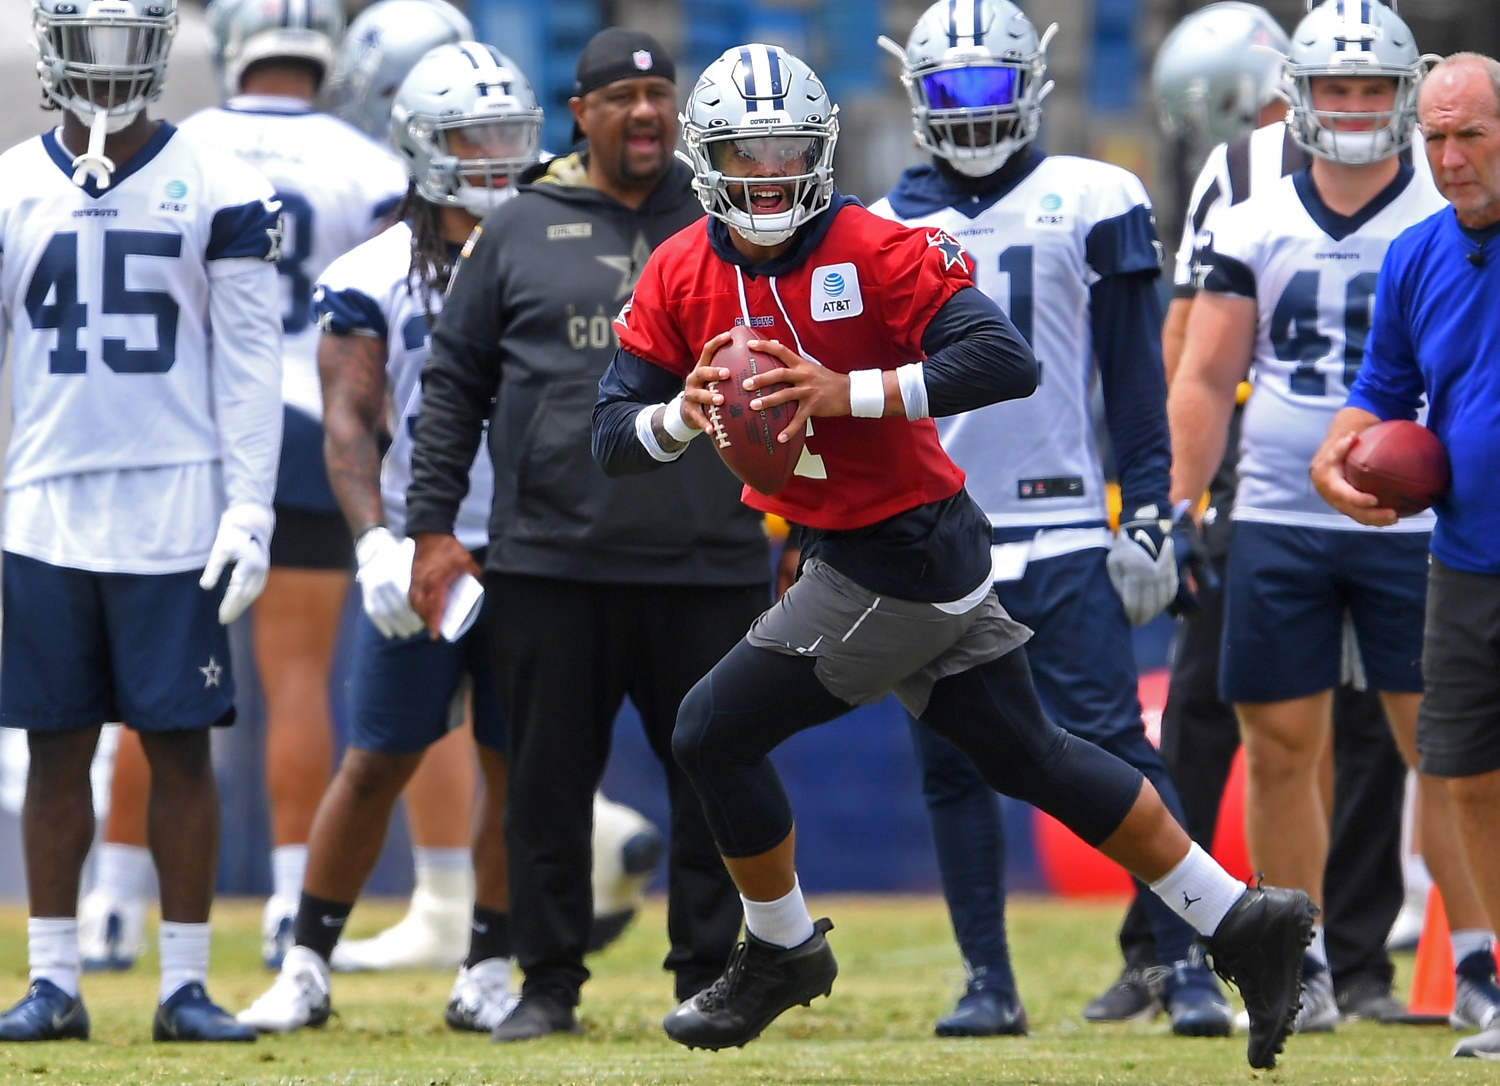 Dallas Cowboys quarterback Dak Prescott readies to pass the ball during training camp practice.